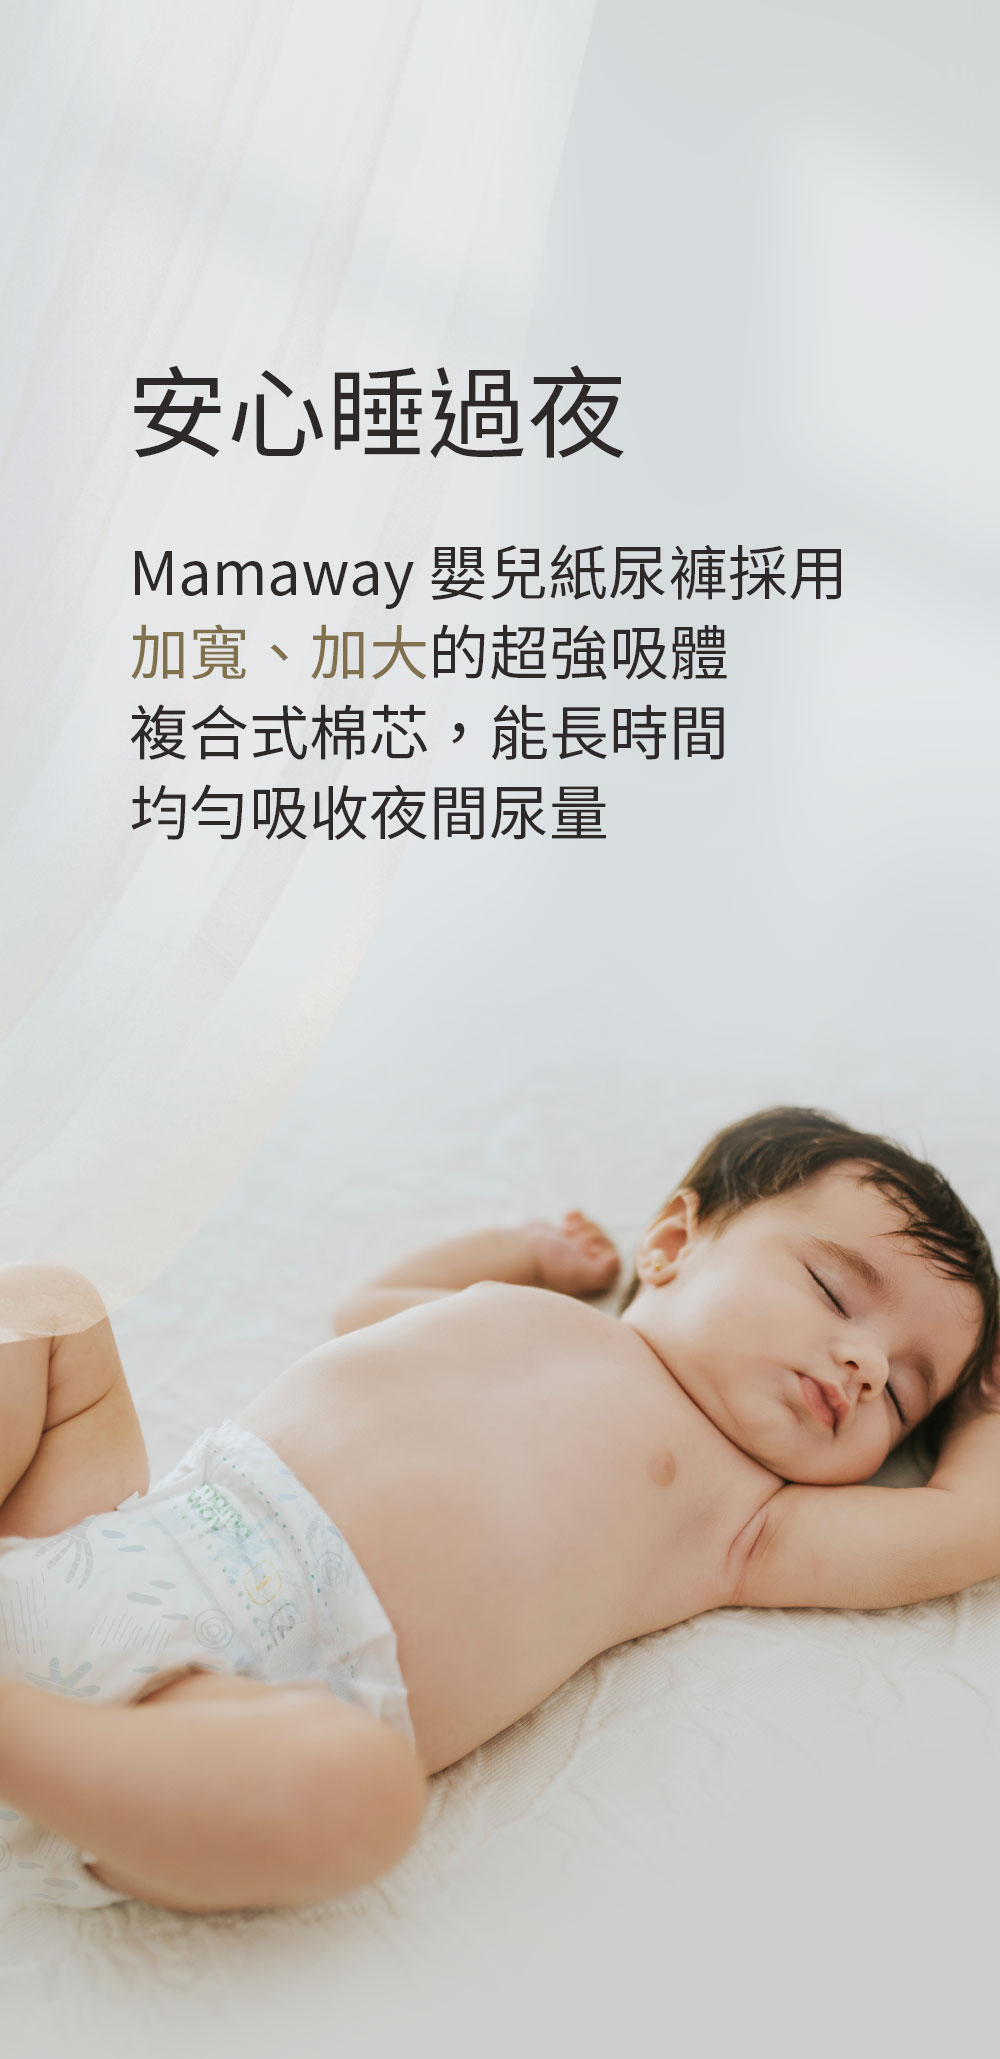 Mamaway紙尿褲